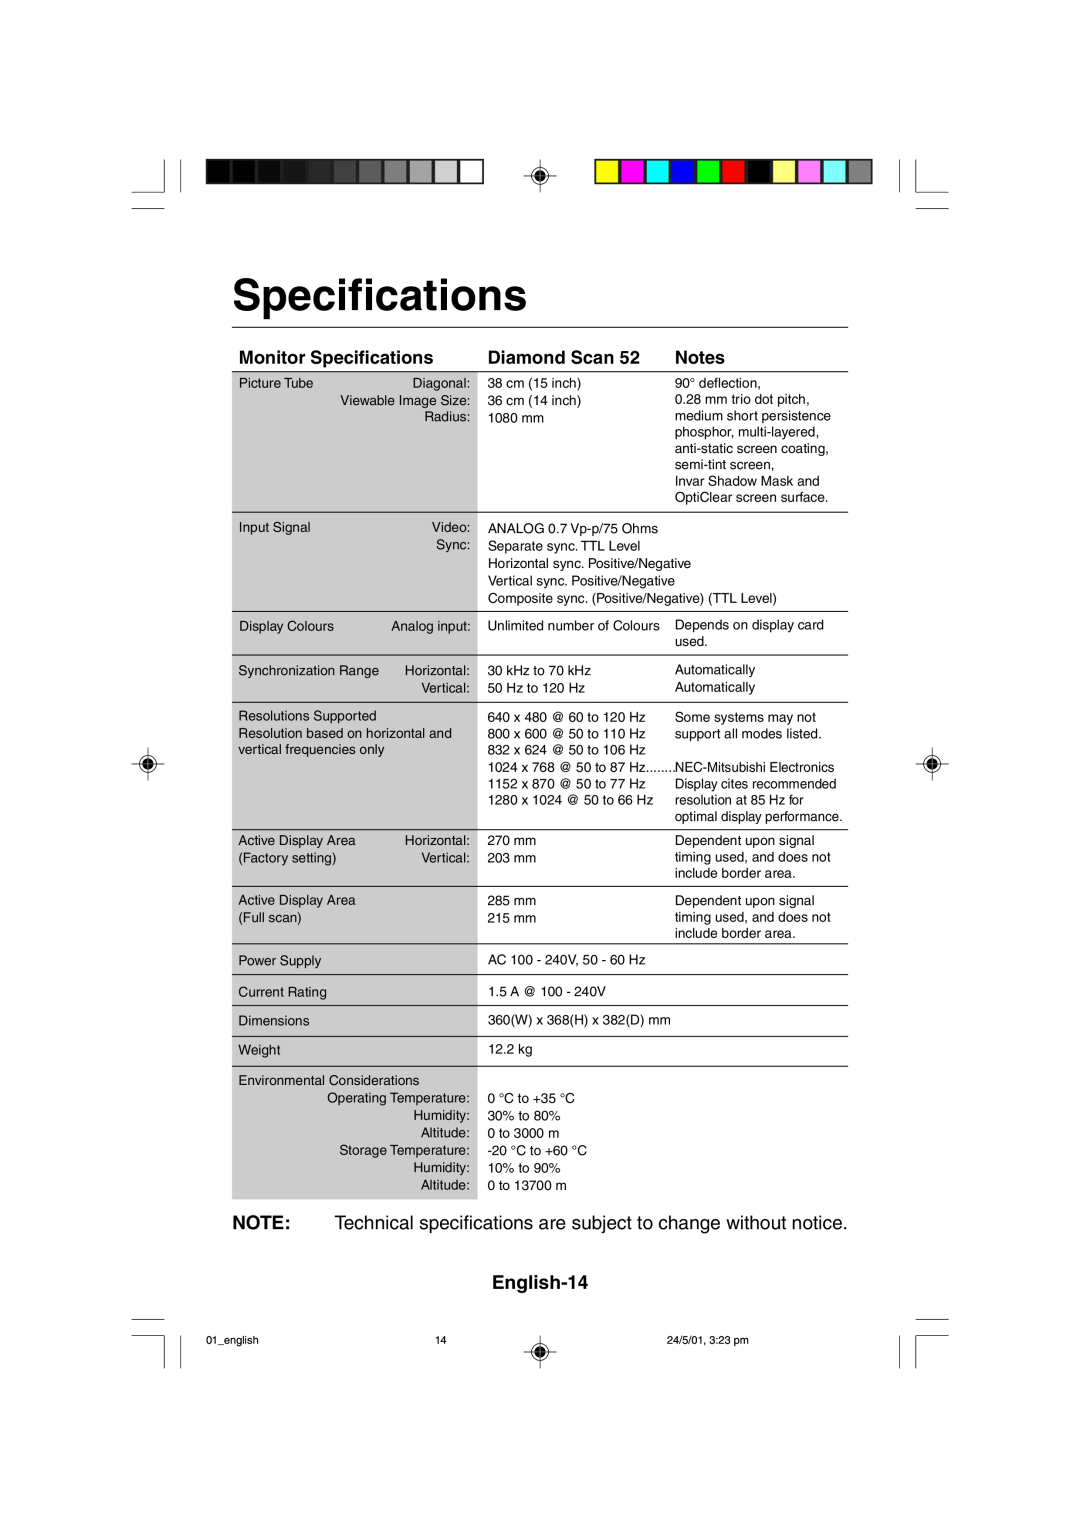 Mitsubishi Electronics M557 user manual English-14, Monitor Specifications, Diamond Scan 